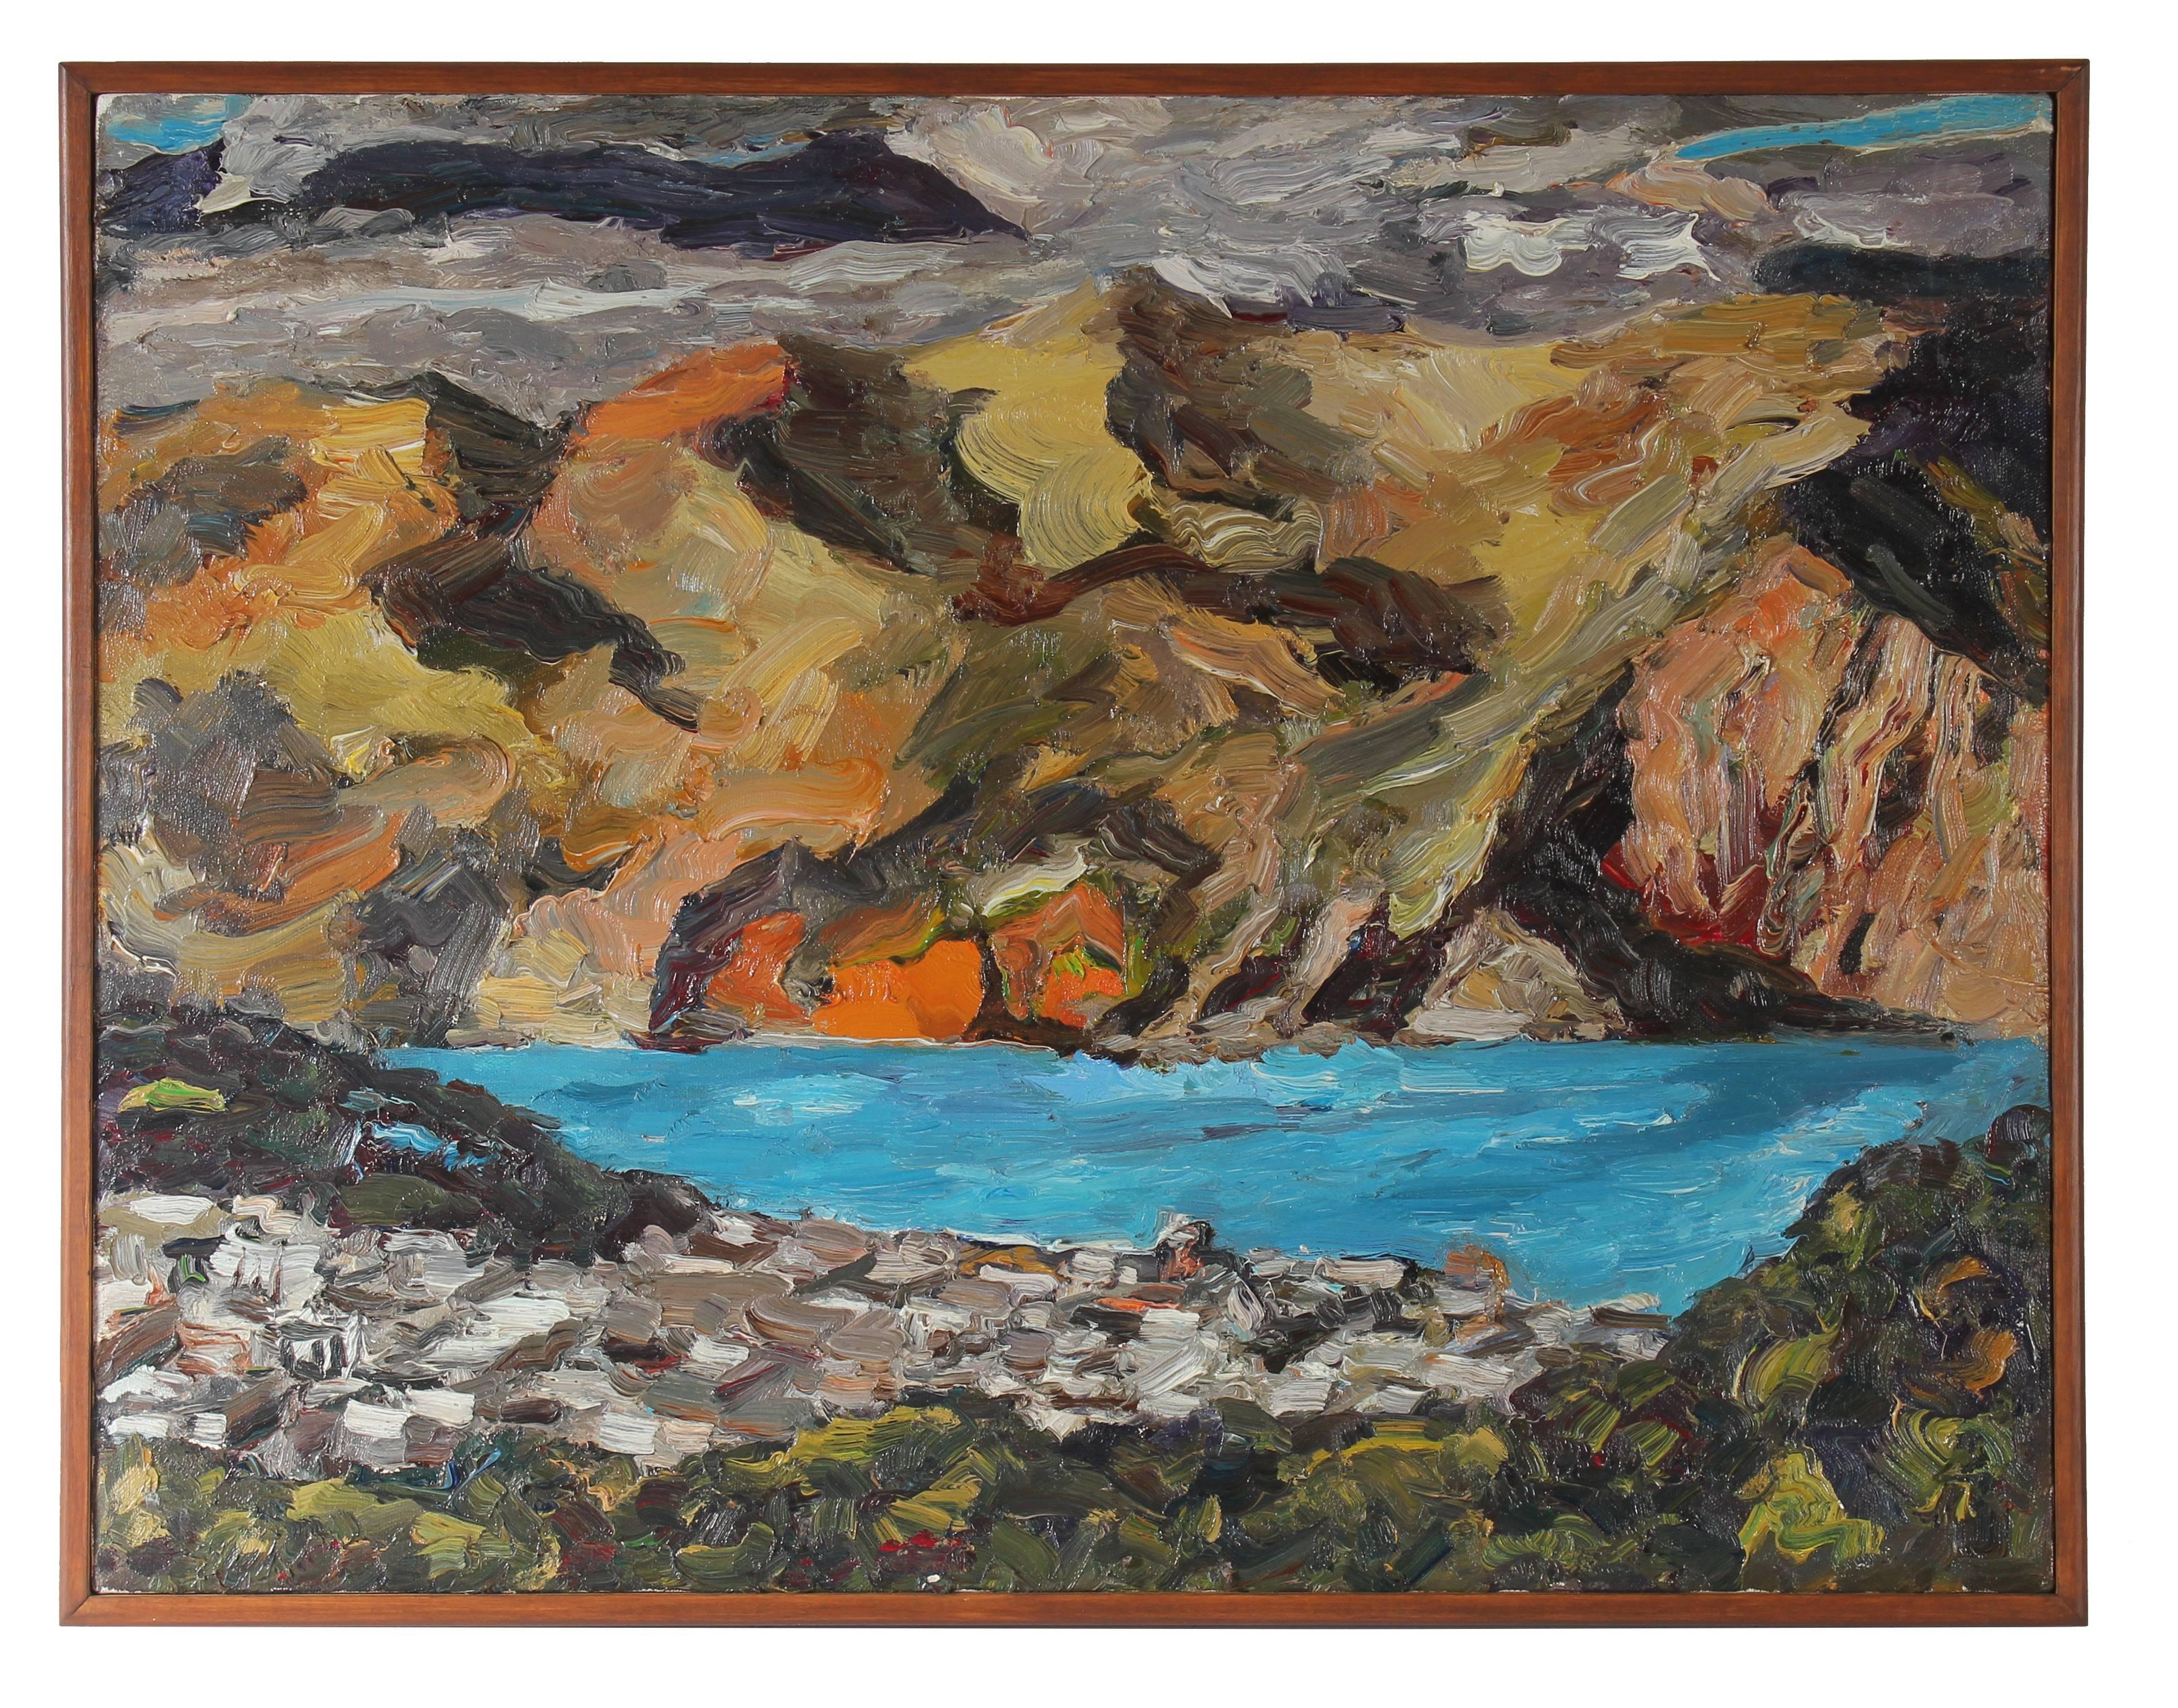 Jack Freeman Landscape Painting - "Cliffs of Marin"